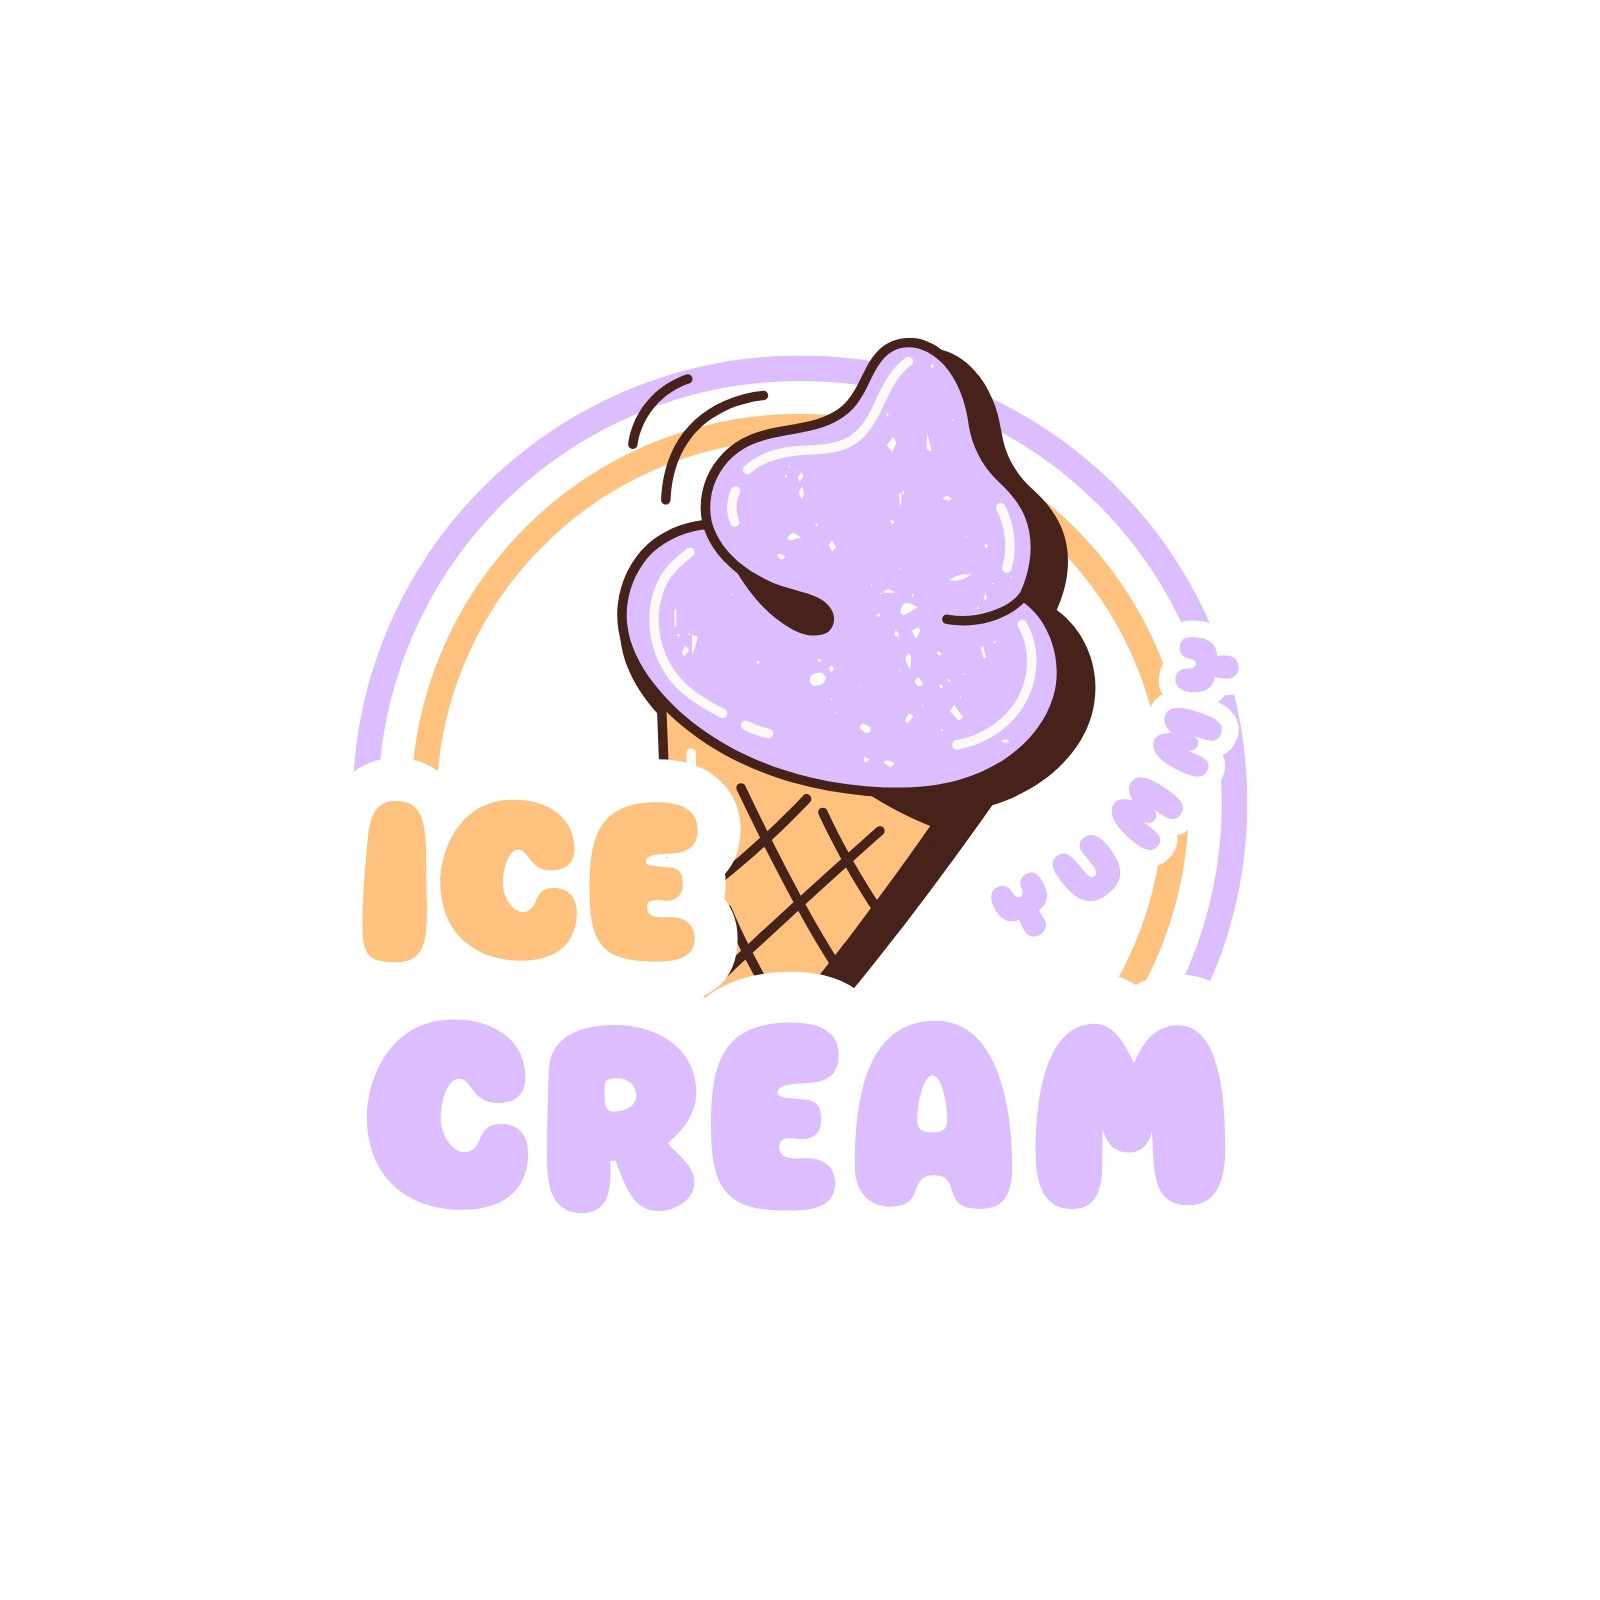 Free and customizable ice cream templates